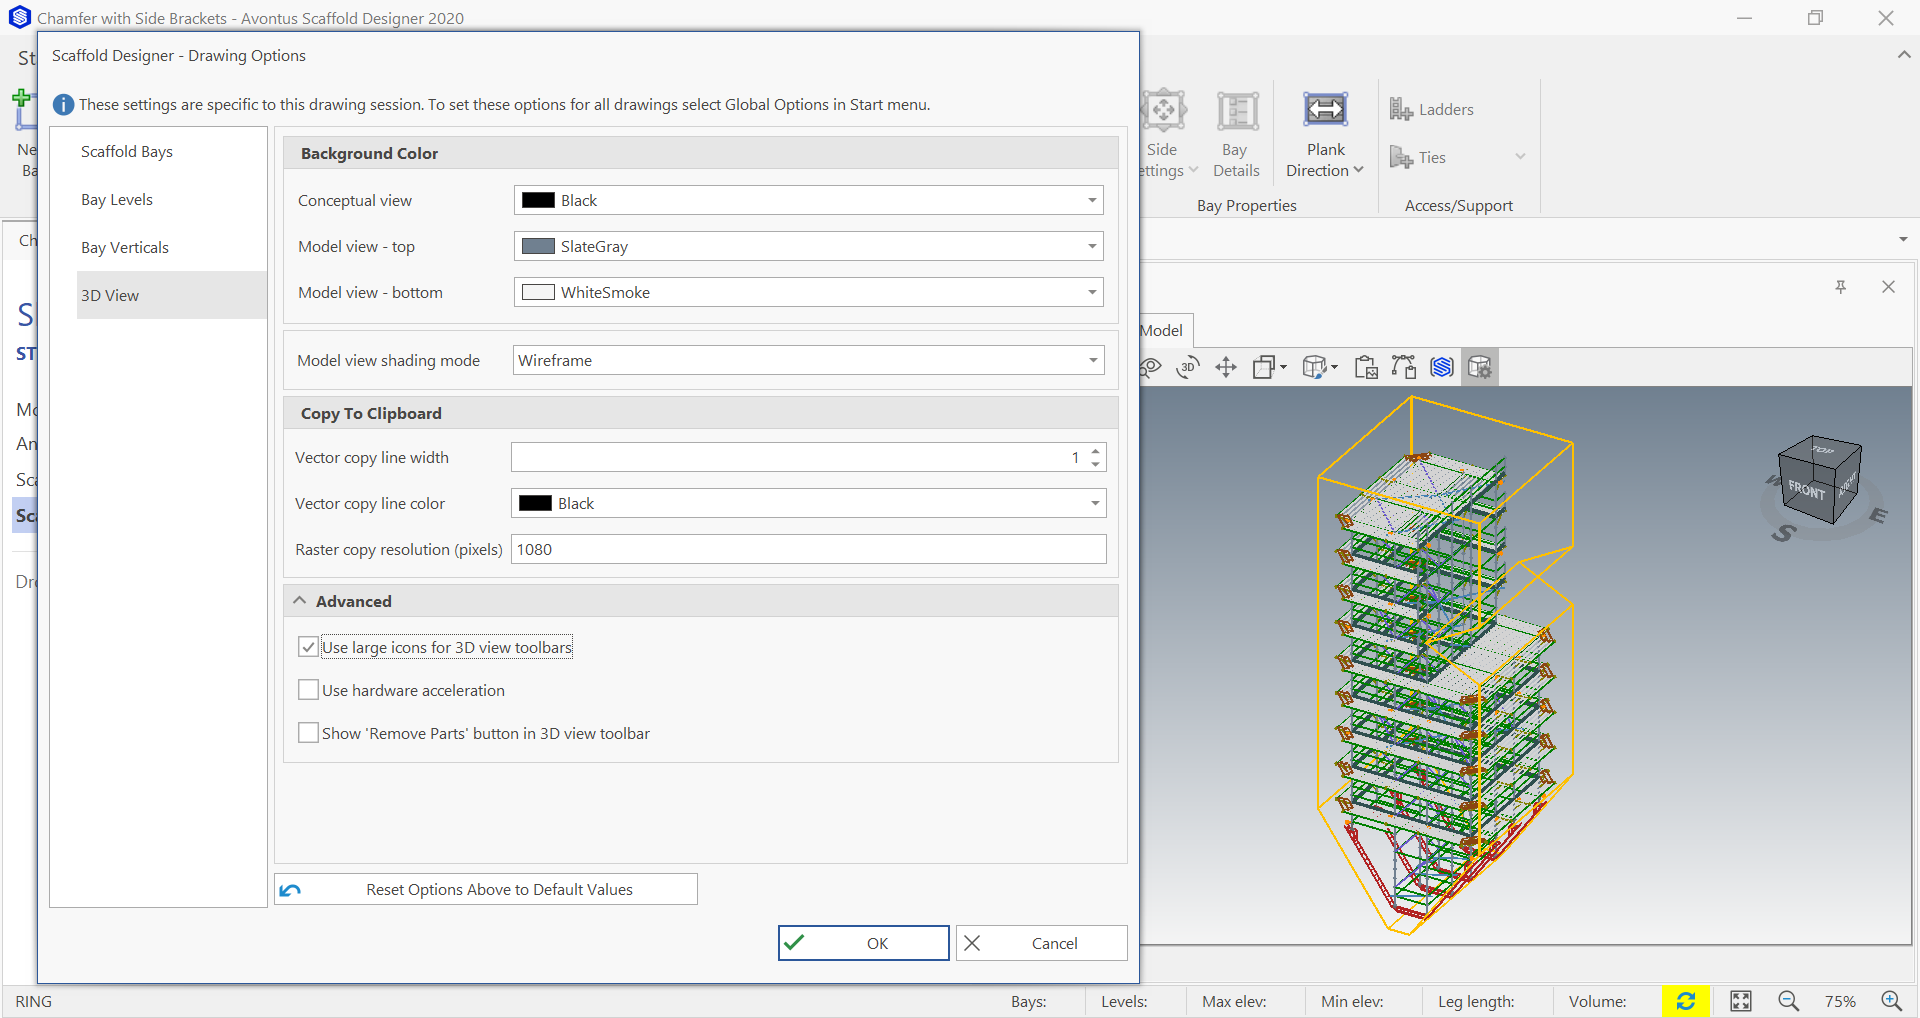 New Scaffold Designer toolbar has 3D conceptual and model views.